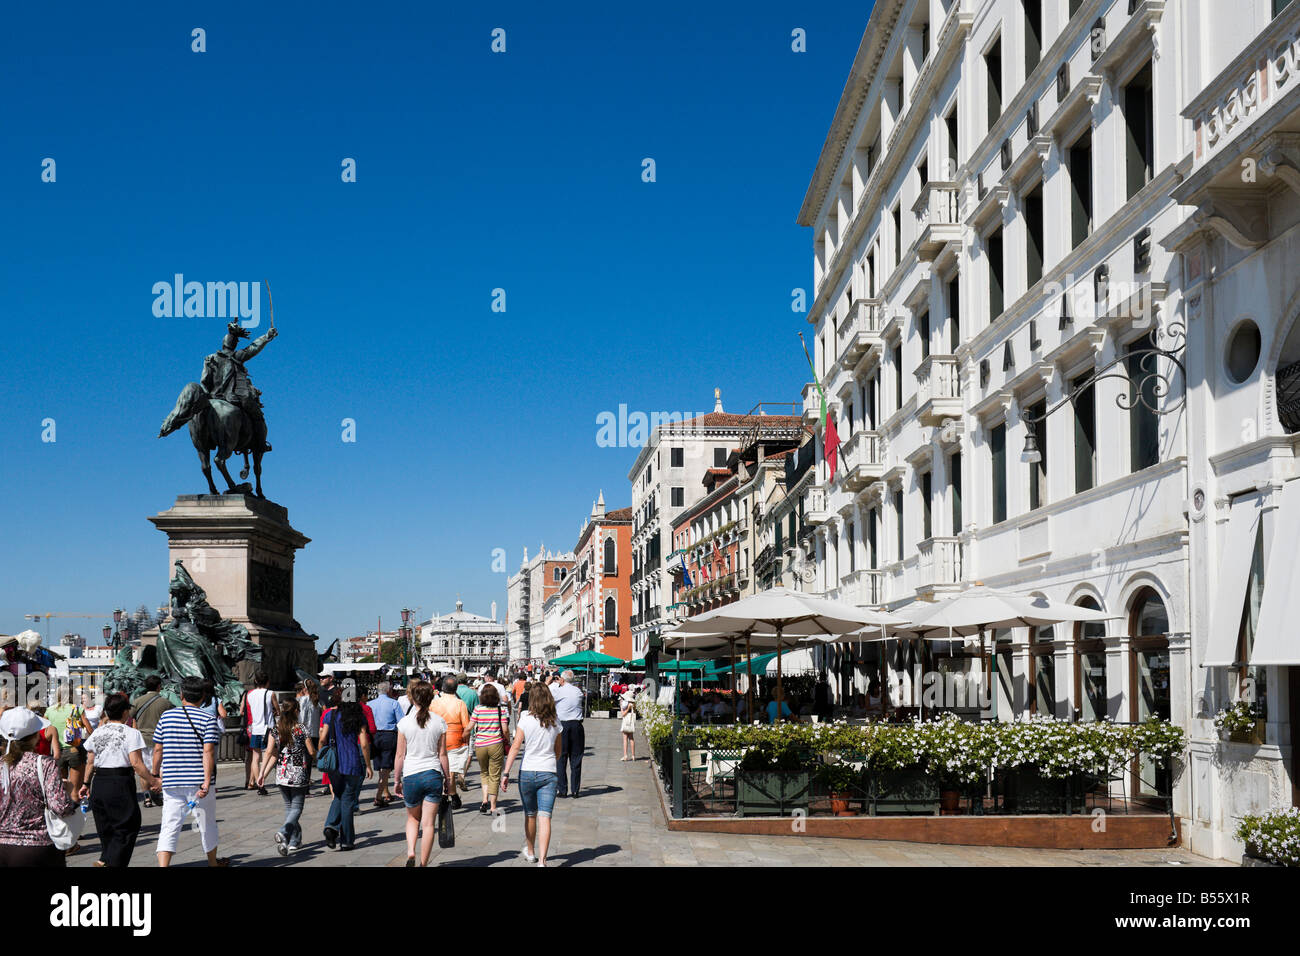 Tourists on the Riva degli Schiavoni outside the hotel Londra Palace, San Marco, Venice, Veneto, Italy Stock Photo